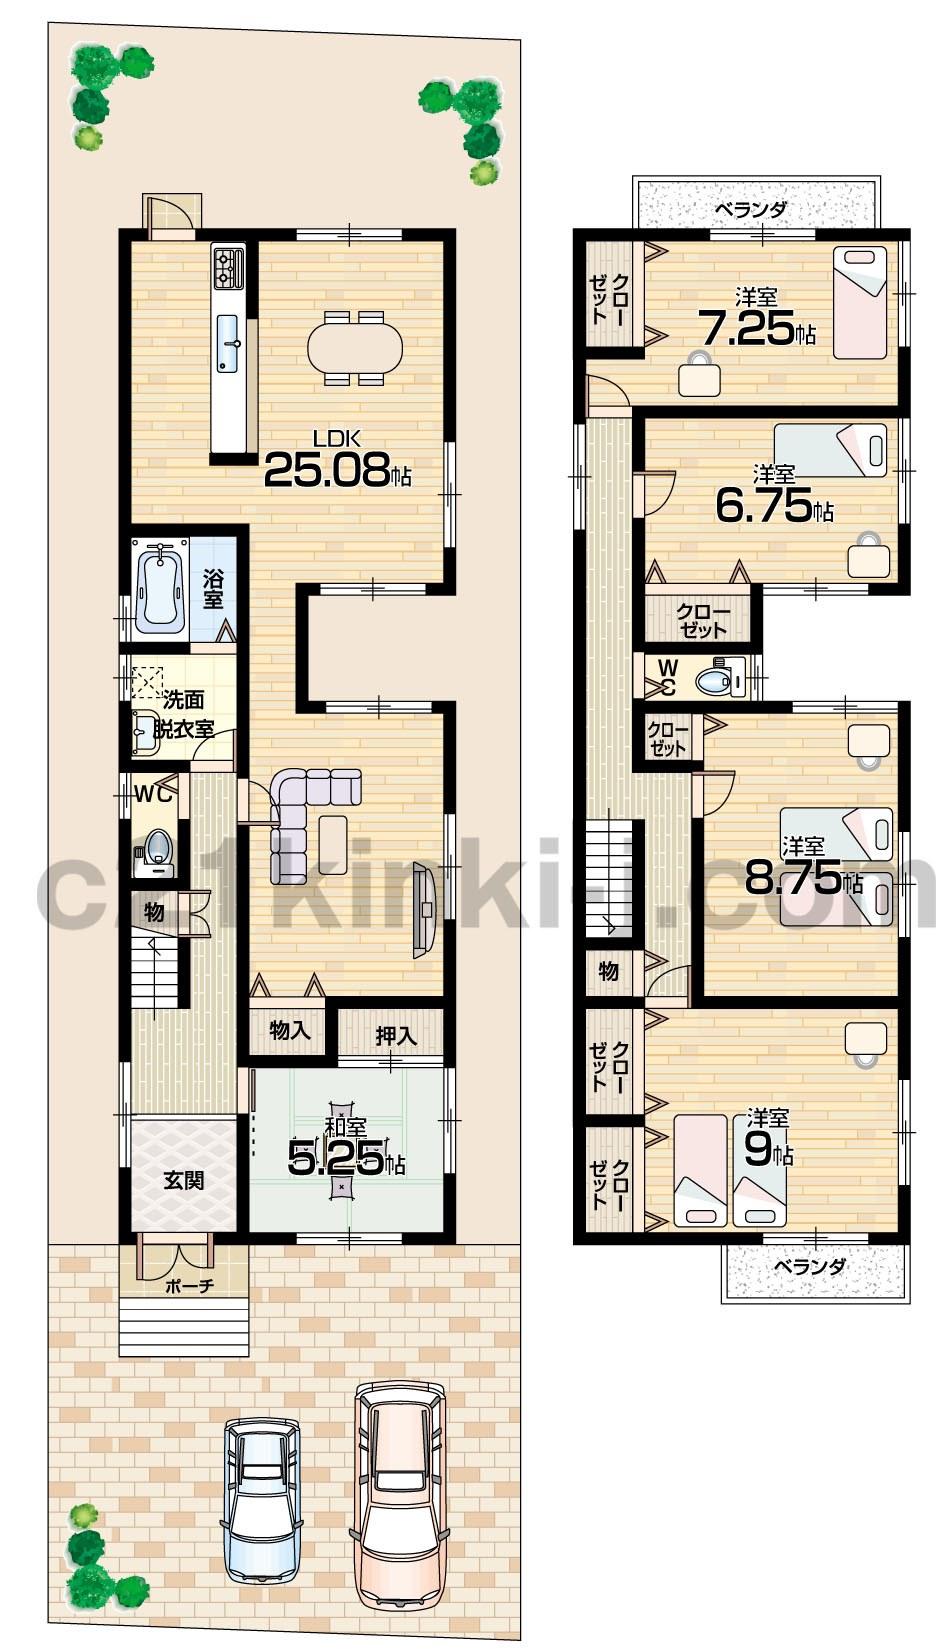 Floor plan. (No. 3 locations), Price 31,300,000 yen, 5LDK, Land area 164.65 sq m , Building area 143.38 sq m